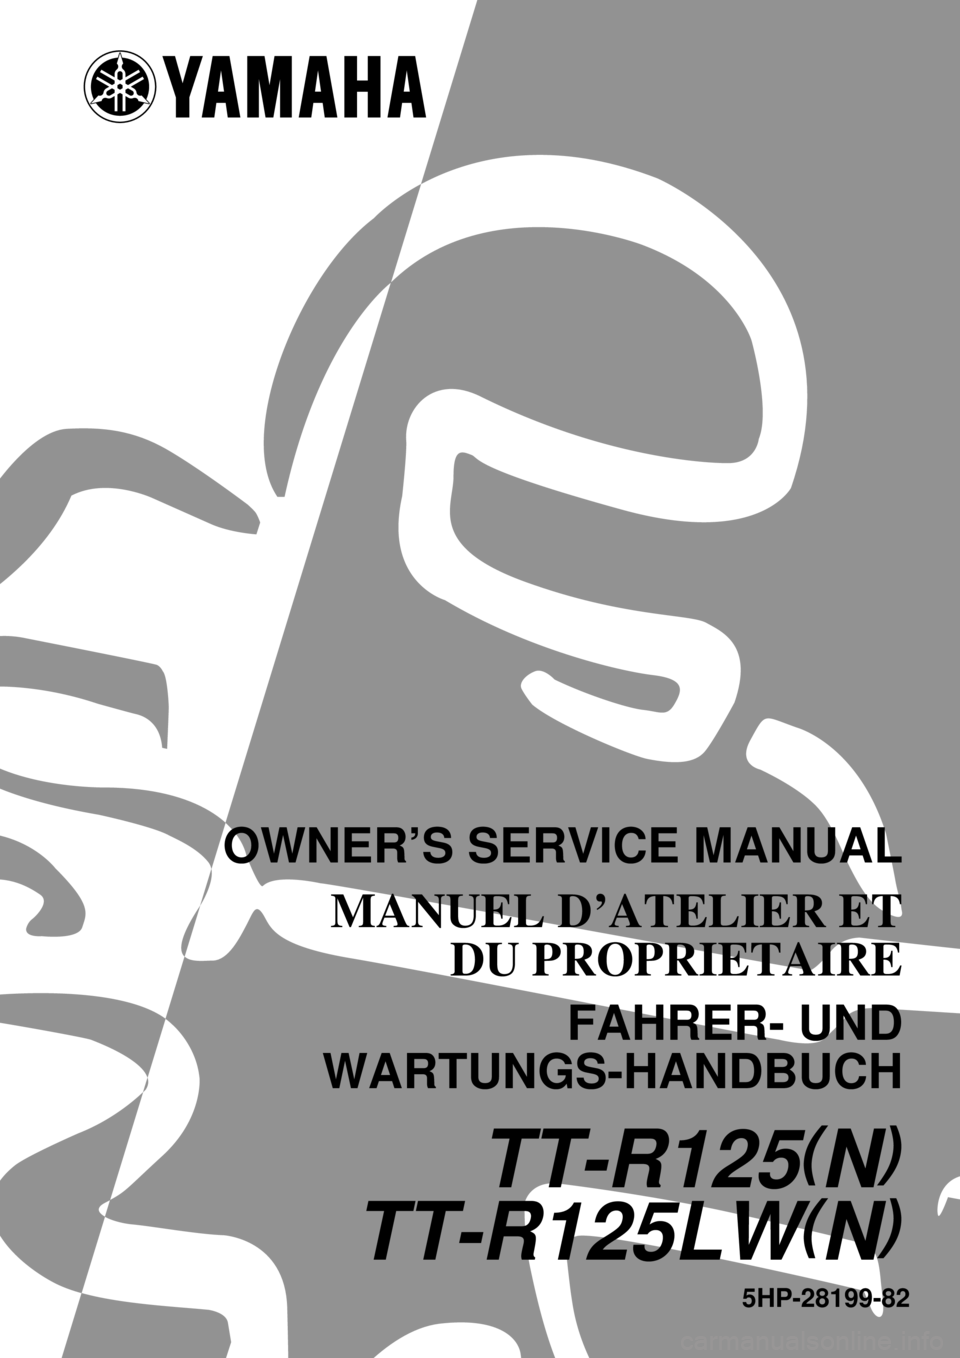 YAMAHA TTR125 2001  Betriebsanleitungen (in German)      
 
 
 
5HP-28199-82
TT-R125(N)
TT-R125LW(N)
OWNER’S SERVICE MANUAL
MANUEL D’ATELIER ET
DU PROPRIETAIRE
FAHRER- UND
WARTUNGS-HANDBUCH 